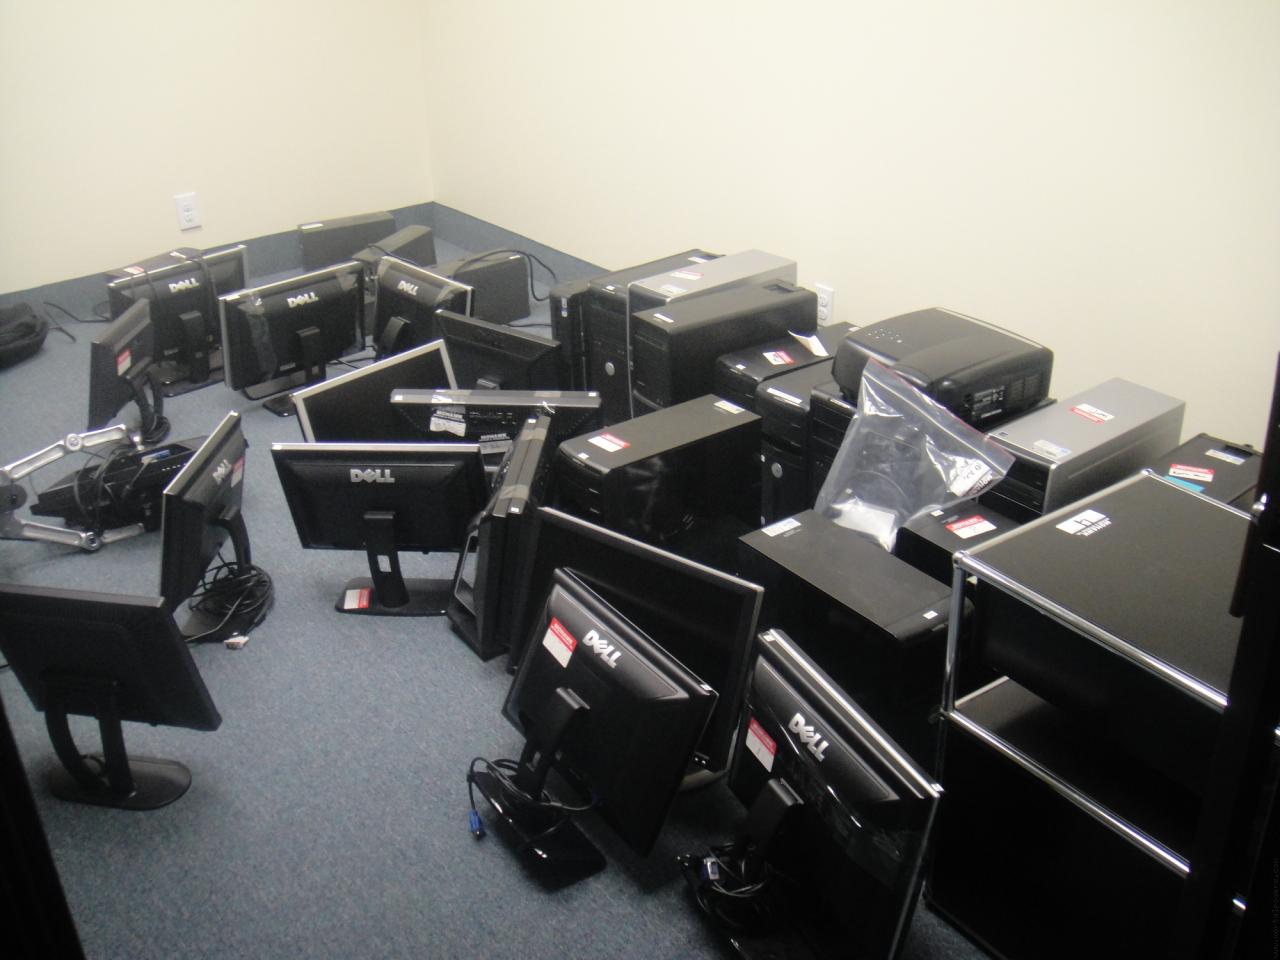 Computer Overload - Mass storage of computers